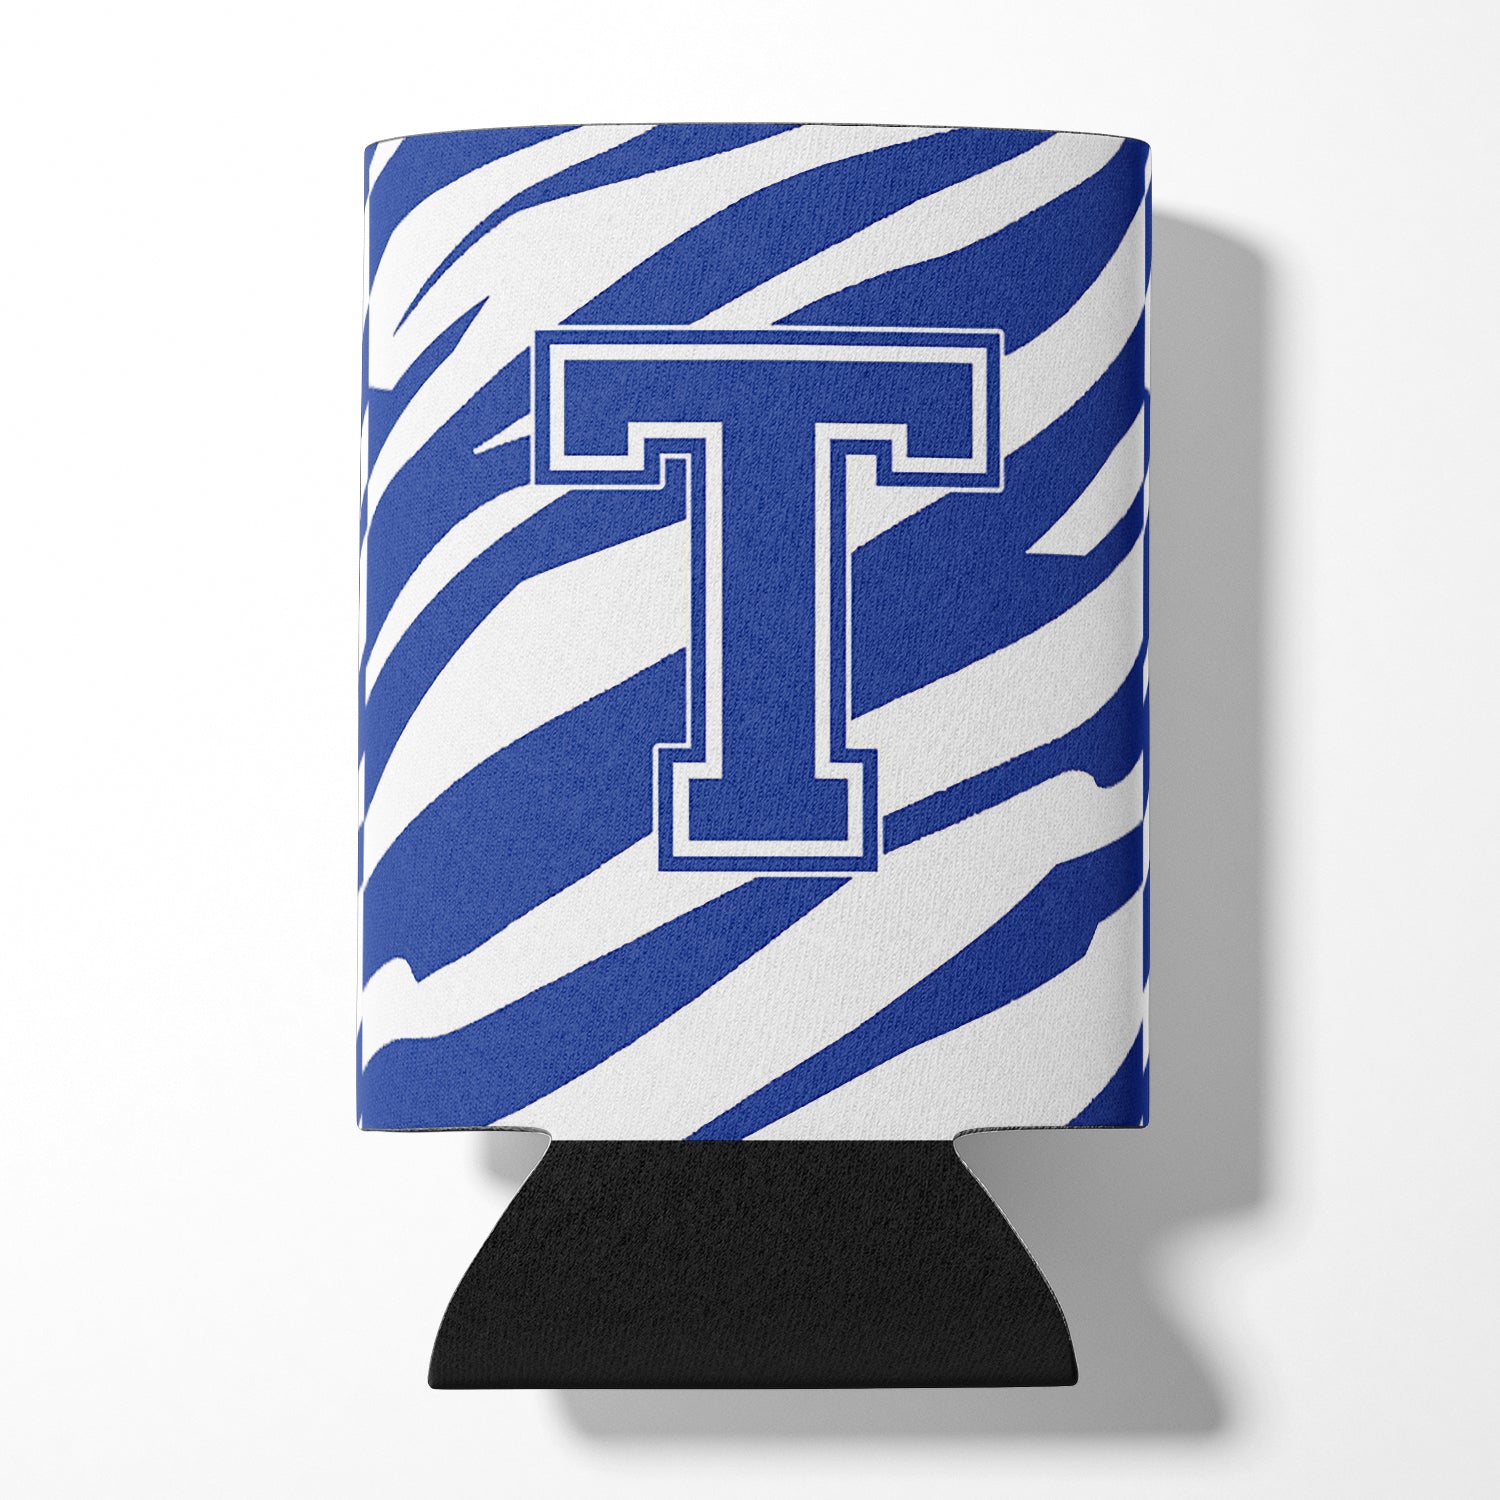 Monogramme initial de la lettre T - Tiger Stripe Blue and White Can Beverage Insulator Hugger